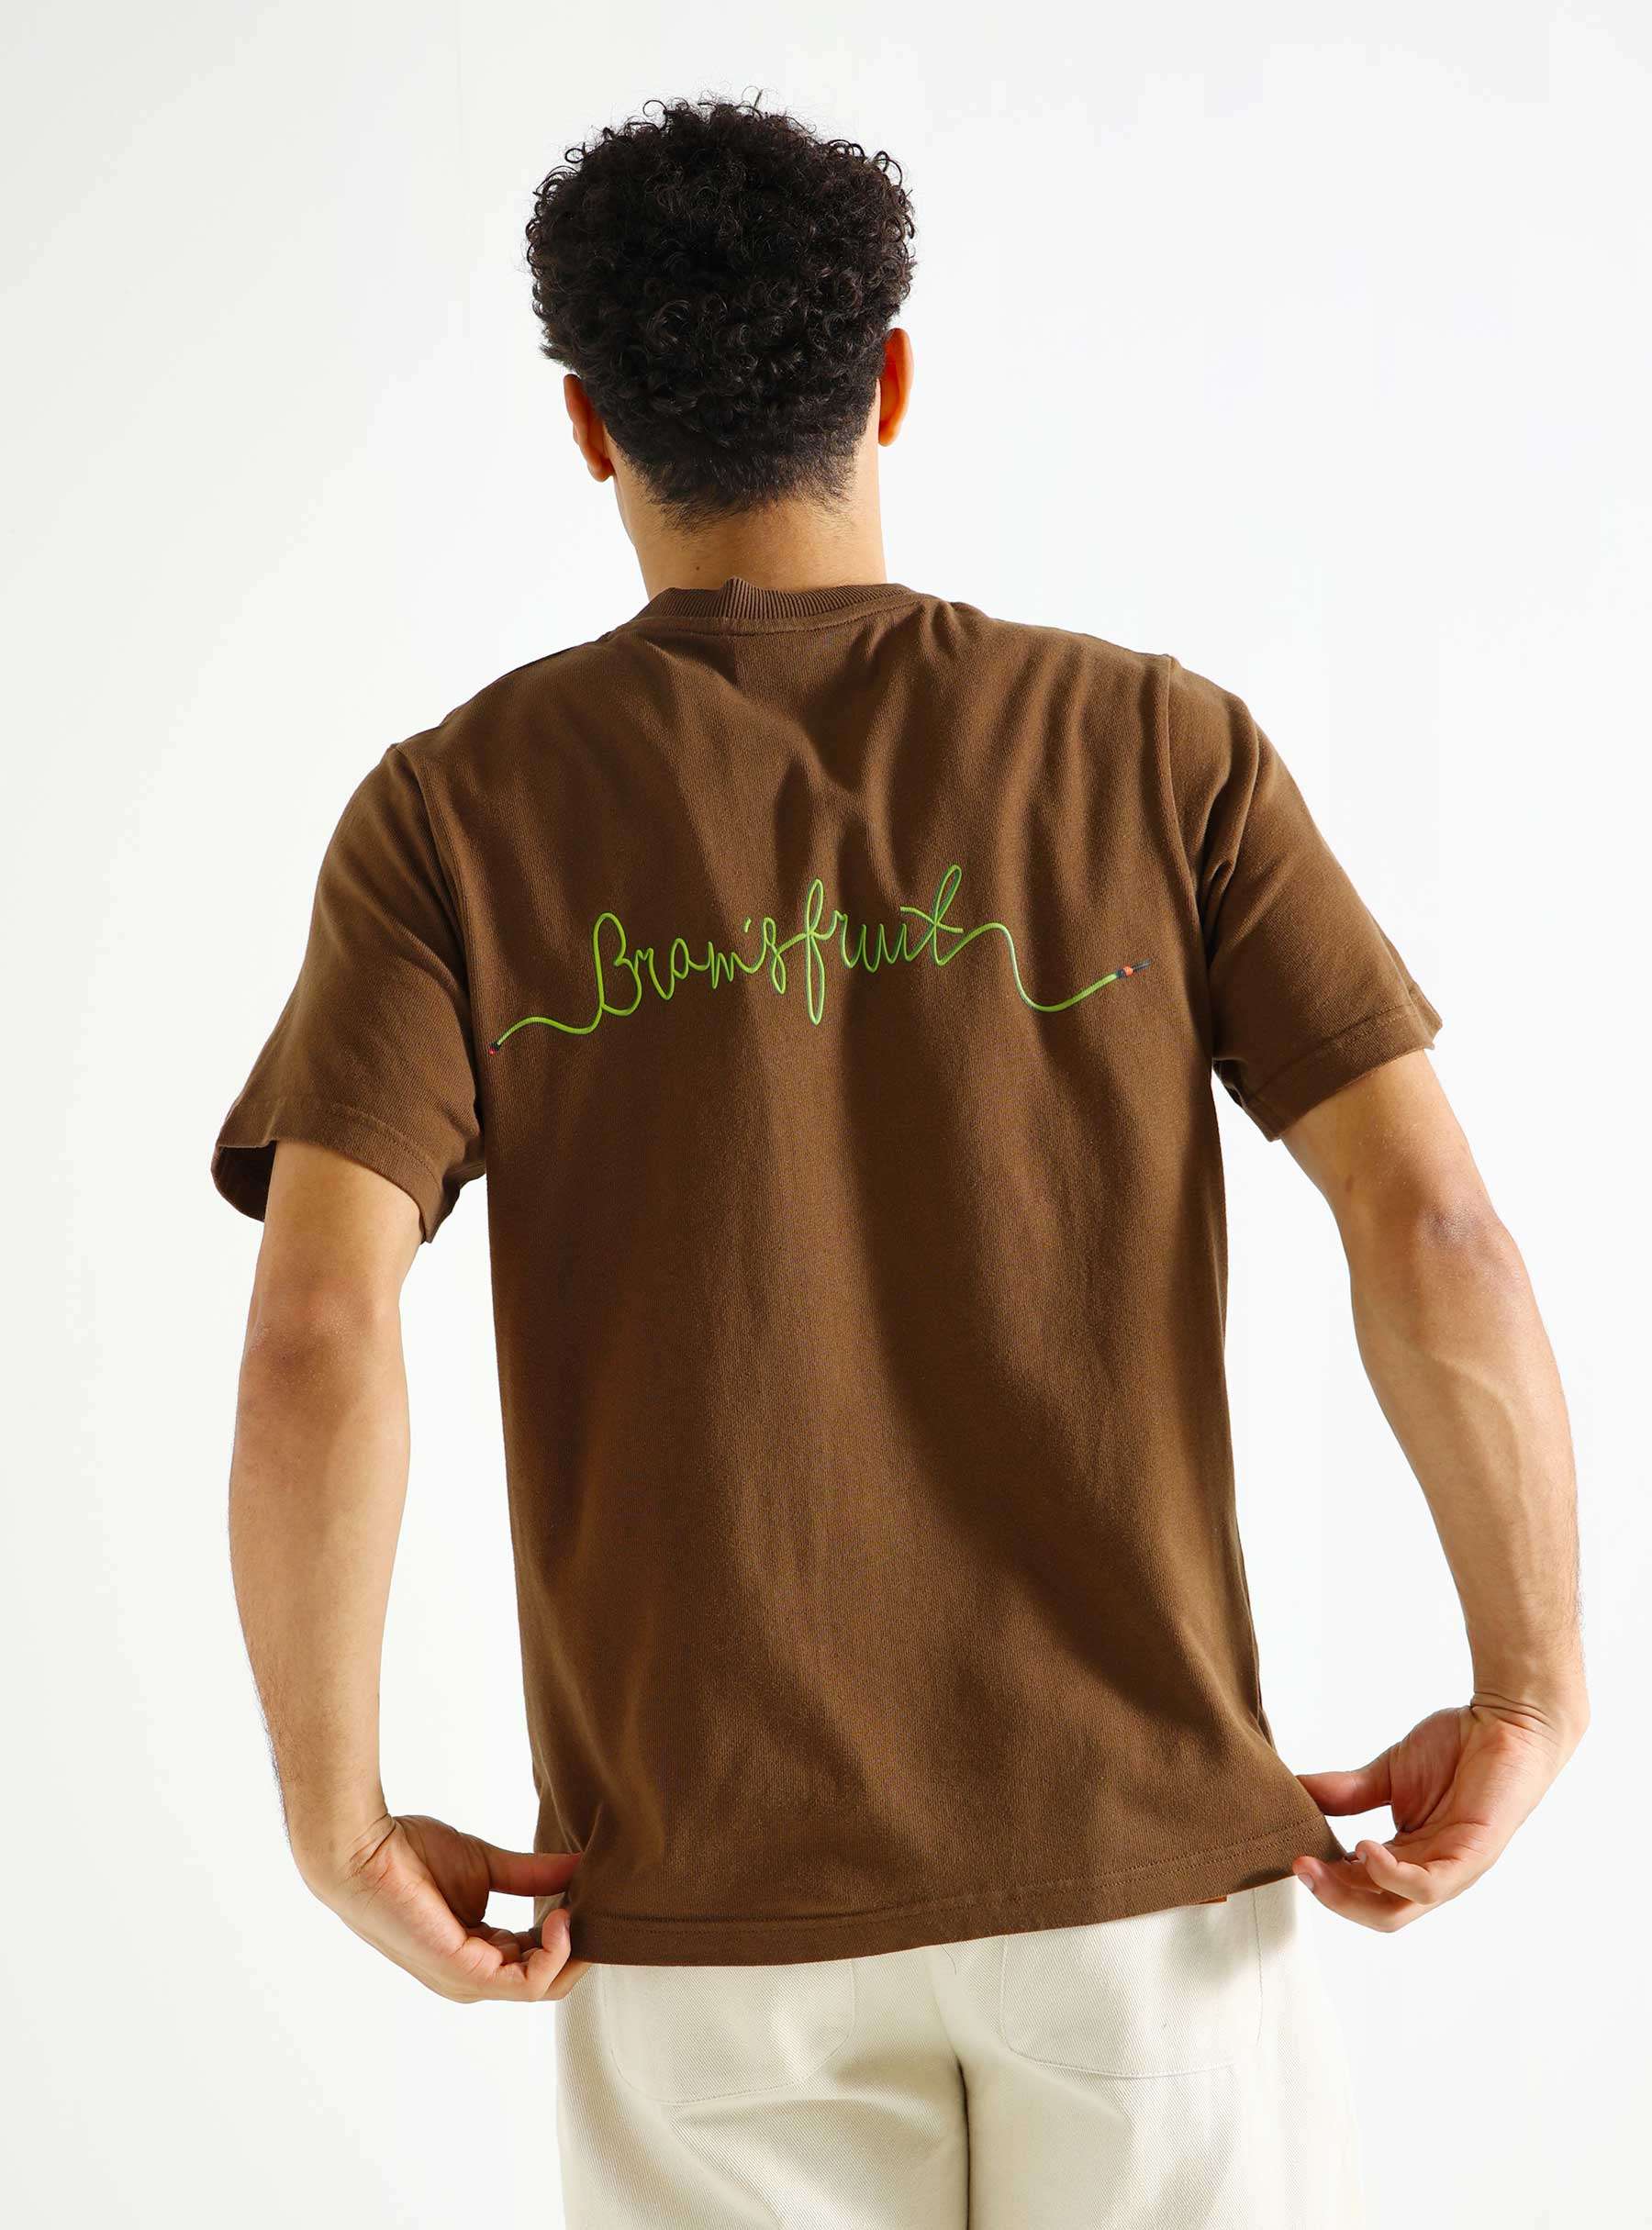 Hose T-shirt Brown 278